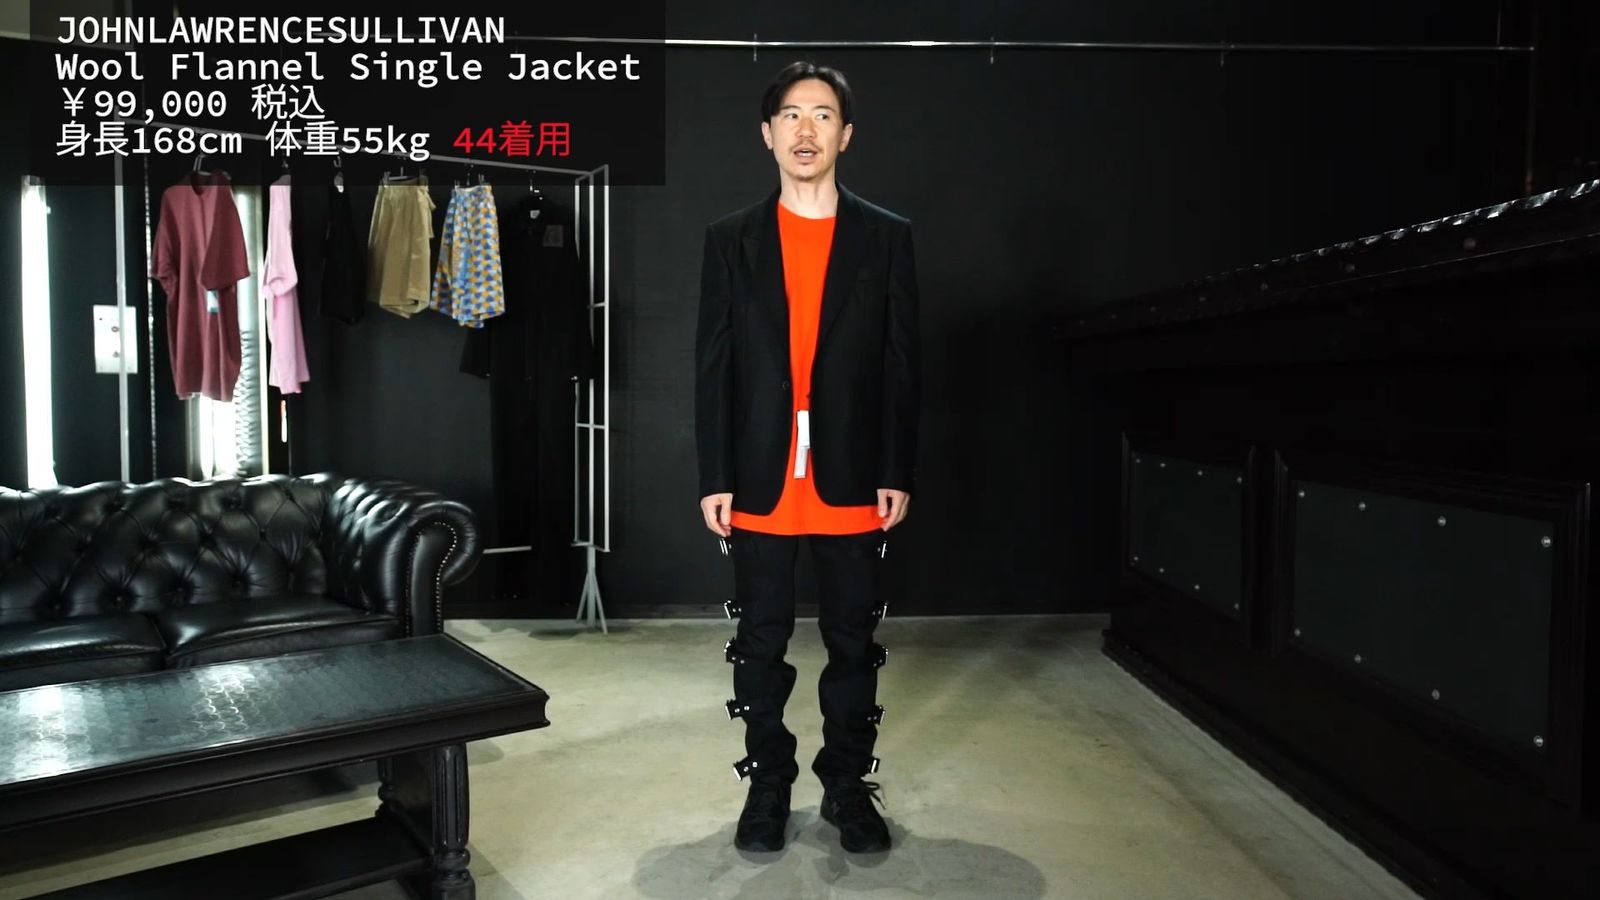 JOHNLAWRENCESULLIVAN - Wool Flannel Single Jacket | ALTERFATE